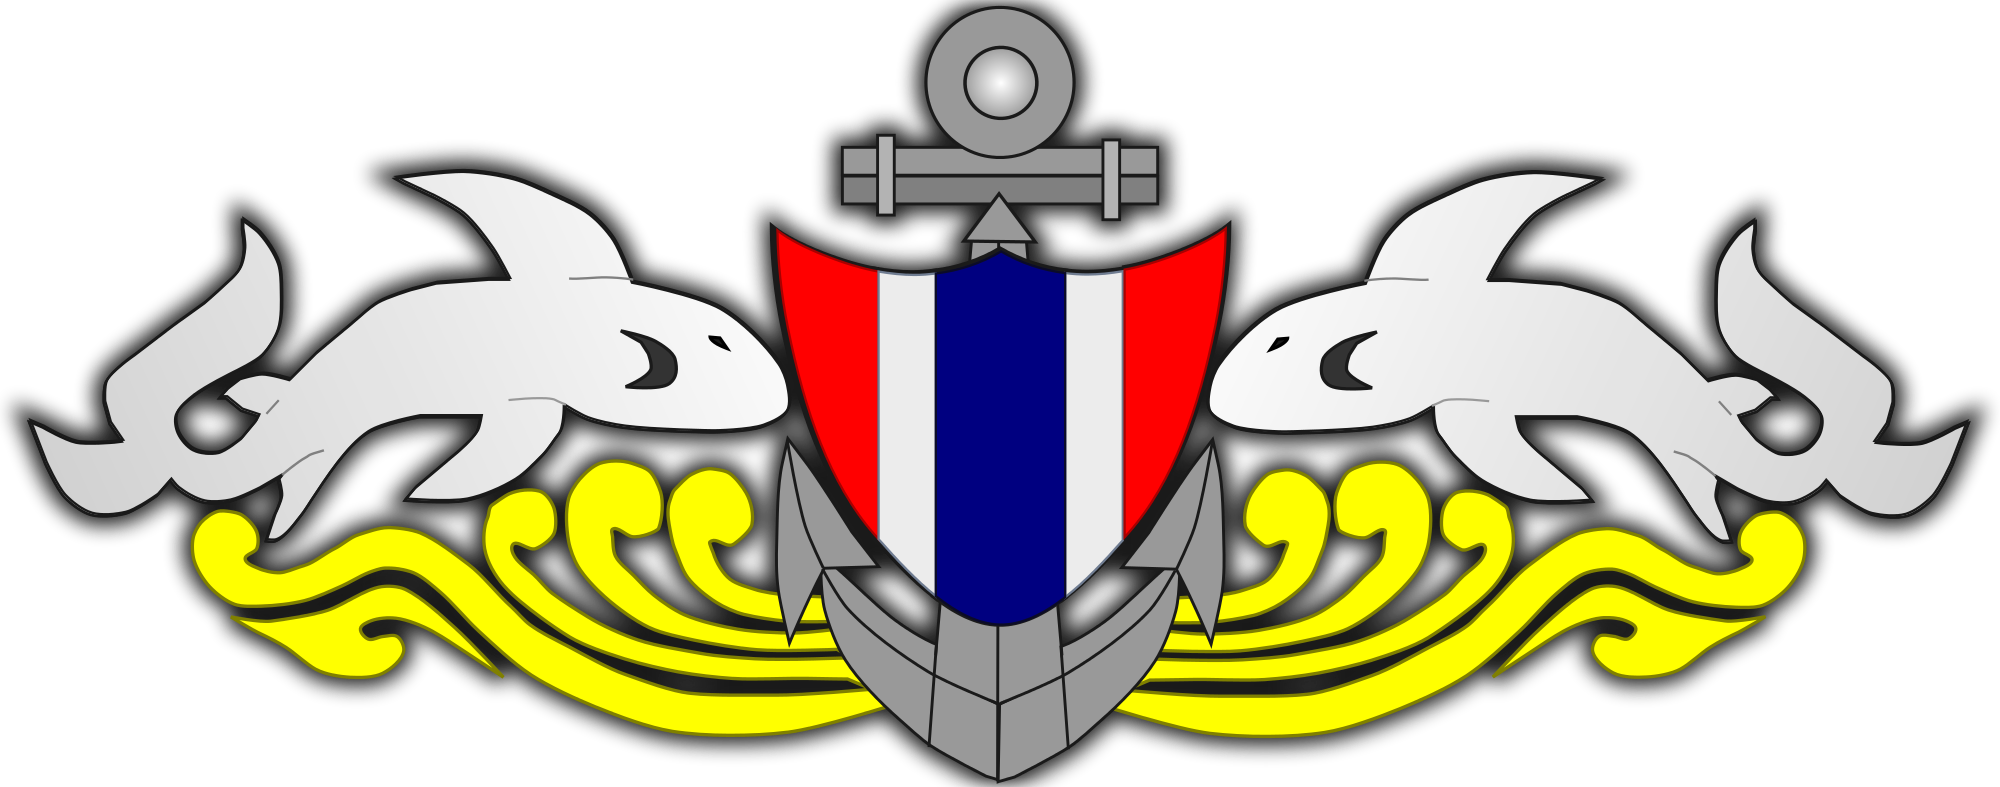 Royal Thai Navy Seals Emblem - Royal Thai Navy Seal (2000x787)